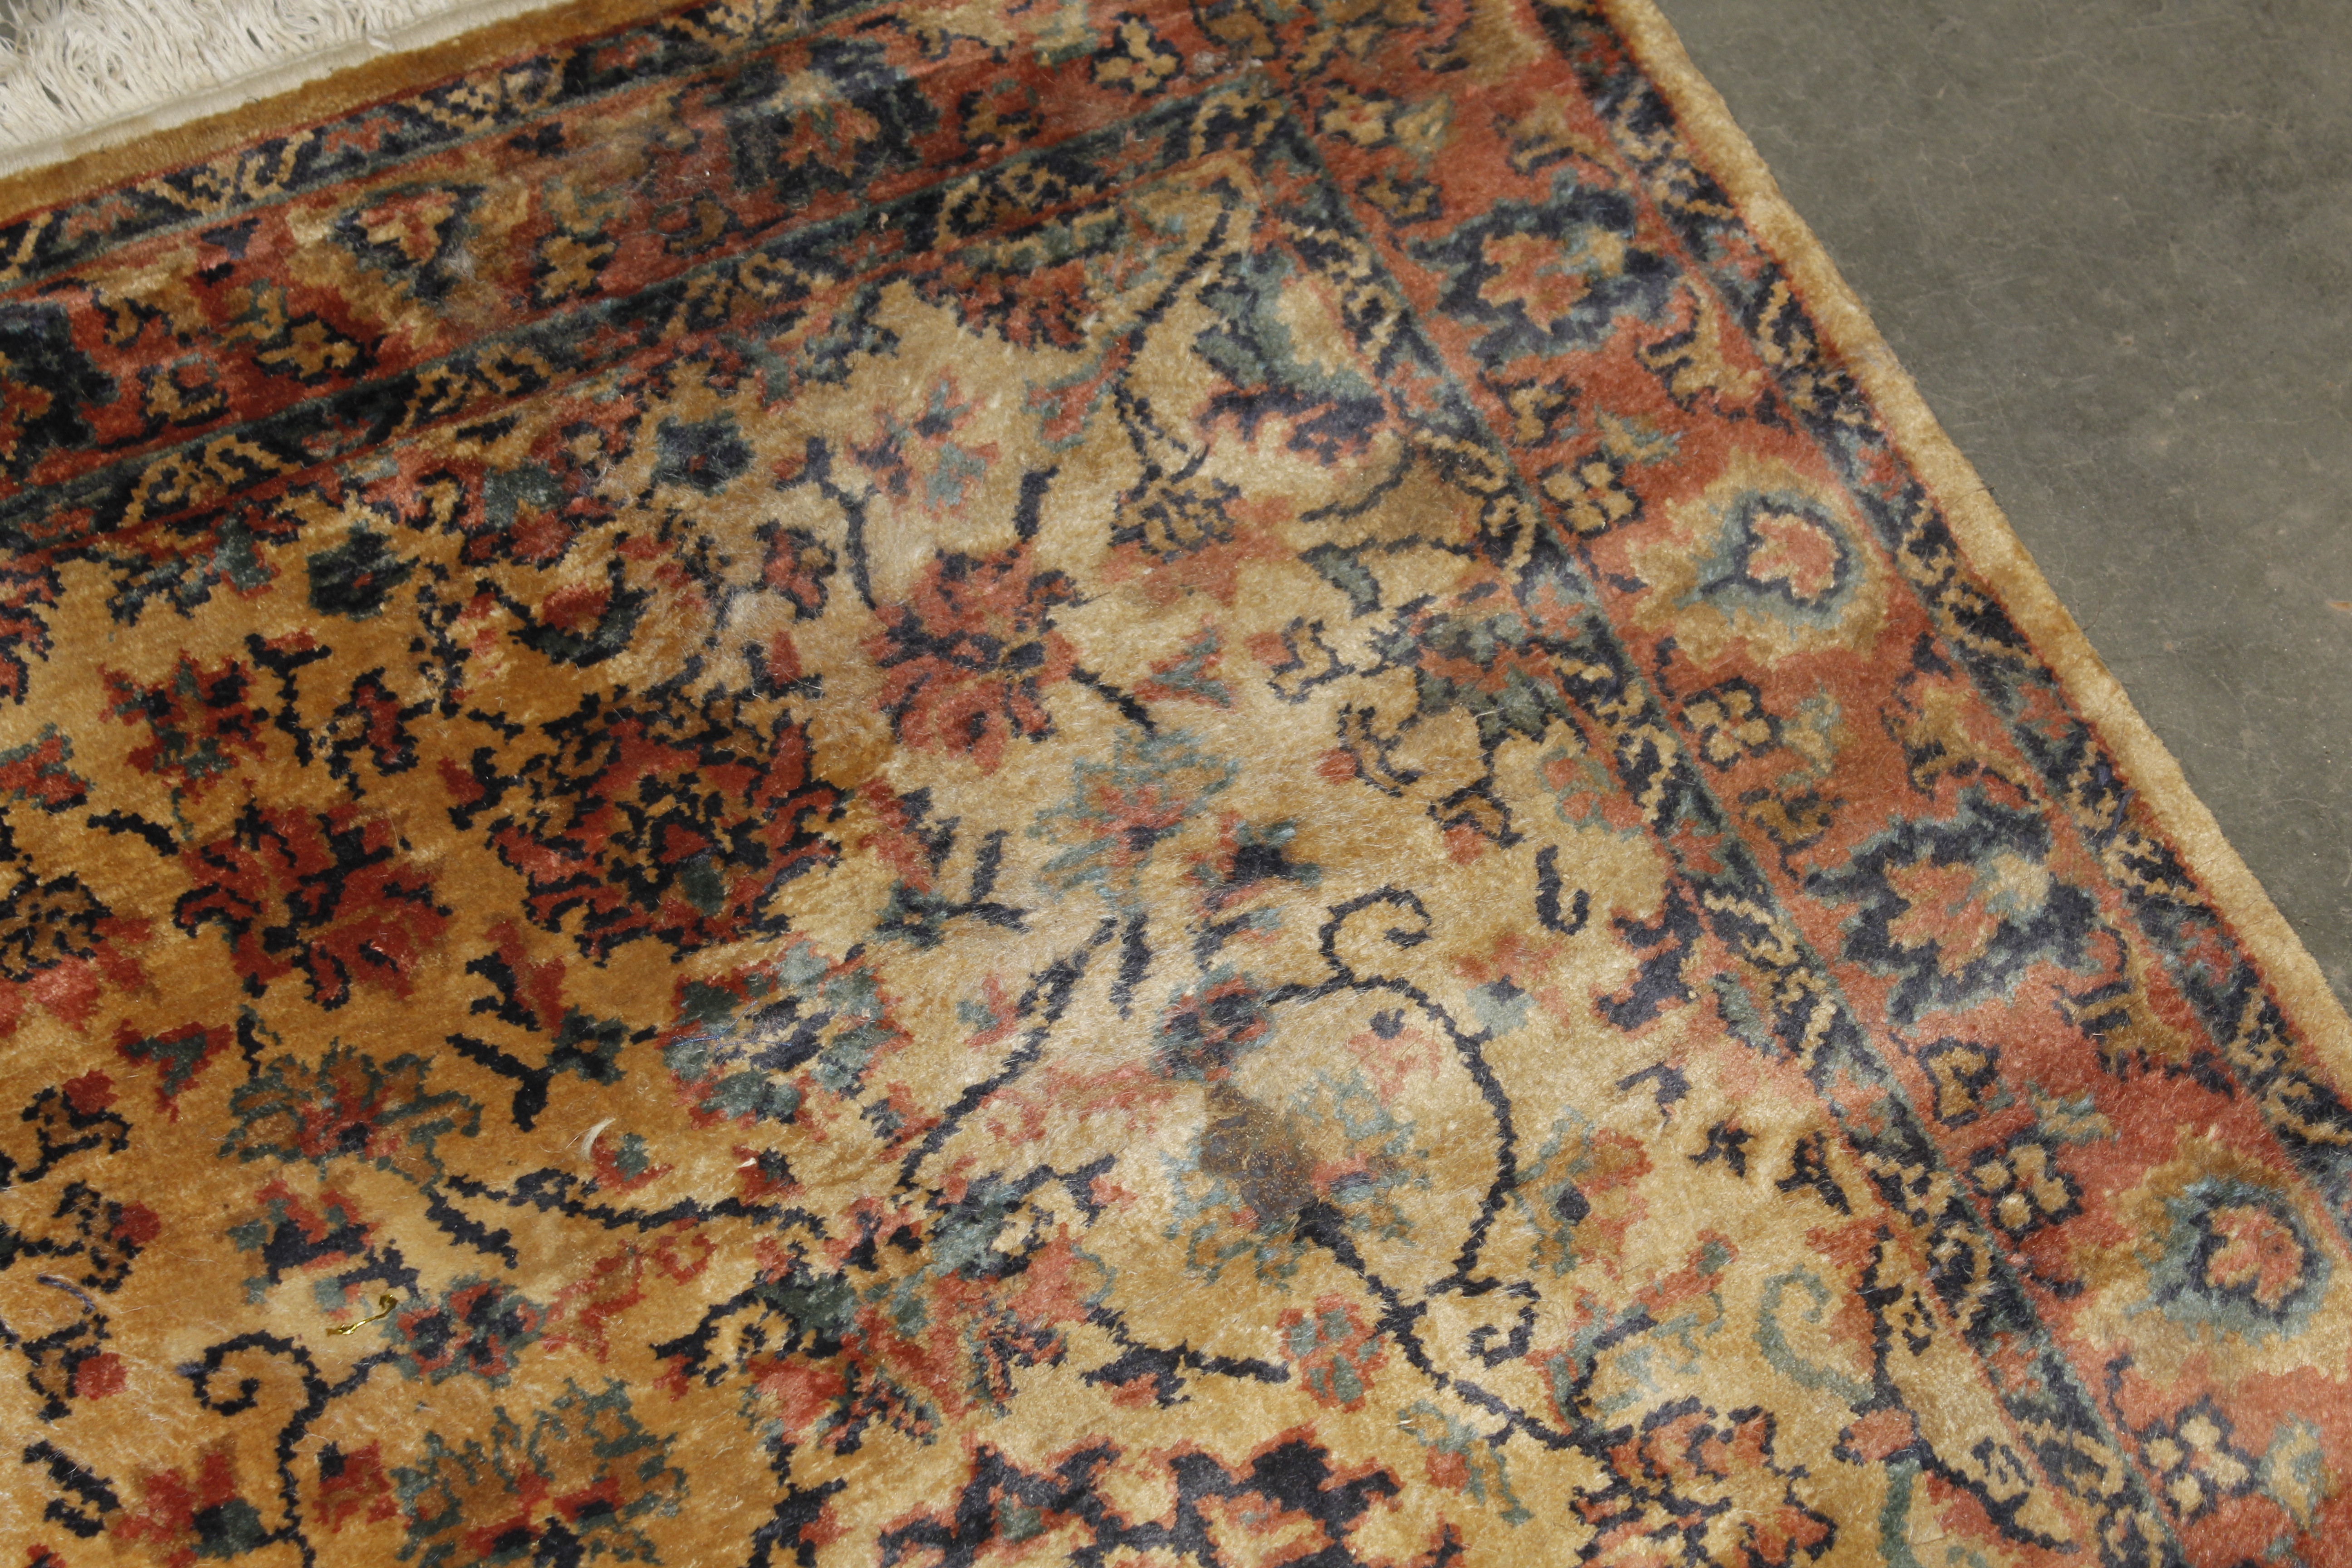 An approx. 5'3" x 3' floral patterned rug AF - Image 4 of 6